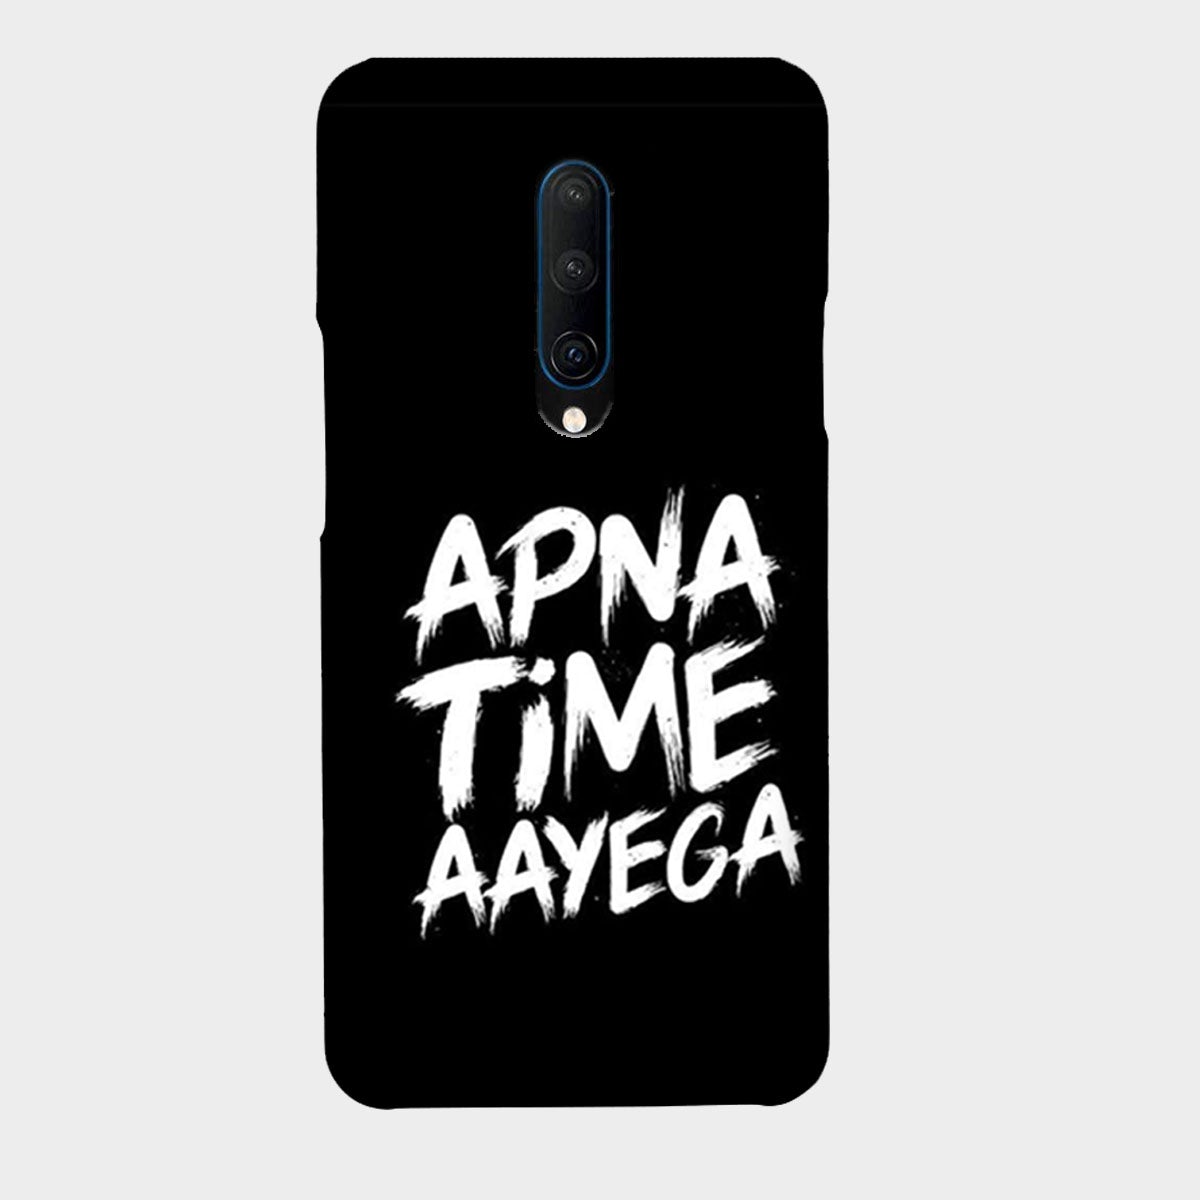 Apna Time Aayega - Mobile Phone Cover - Hard Case - OnePlus